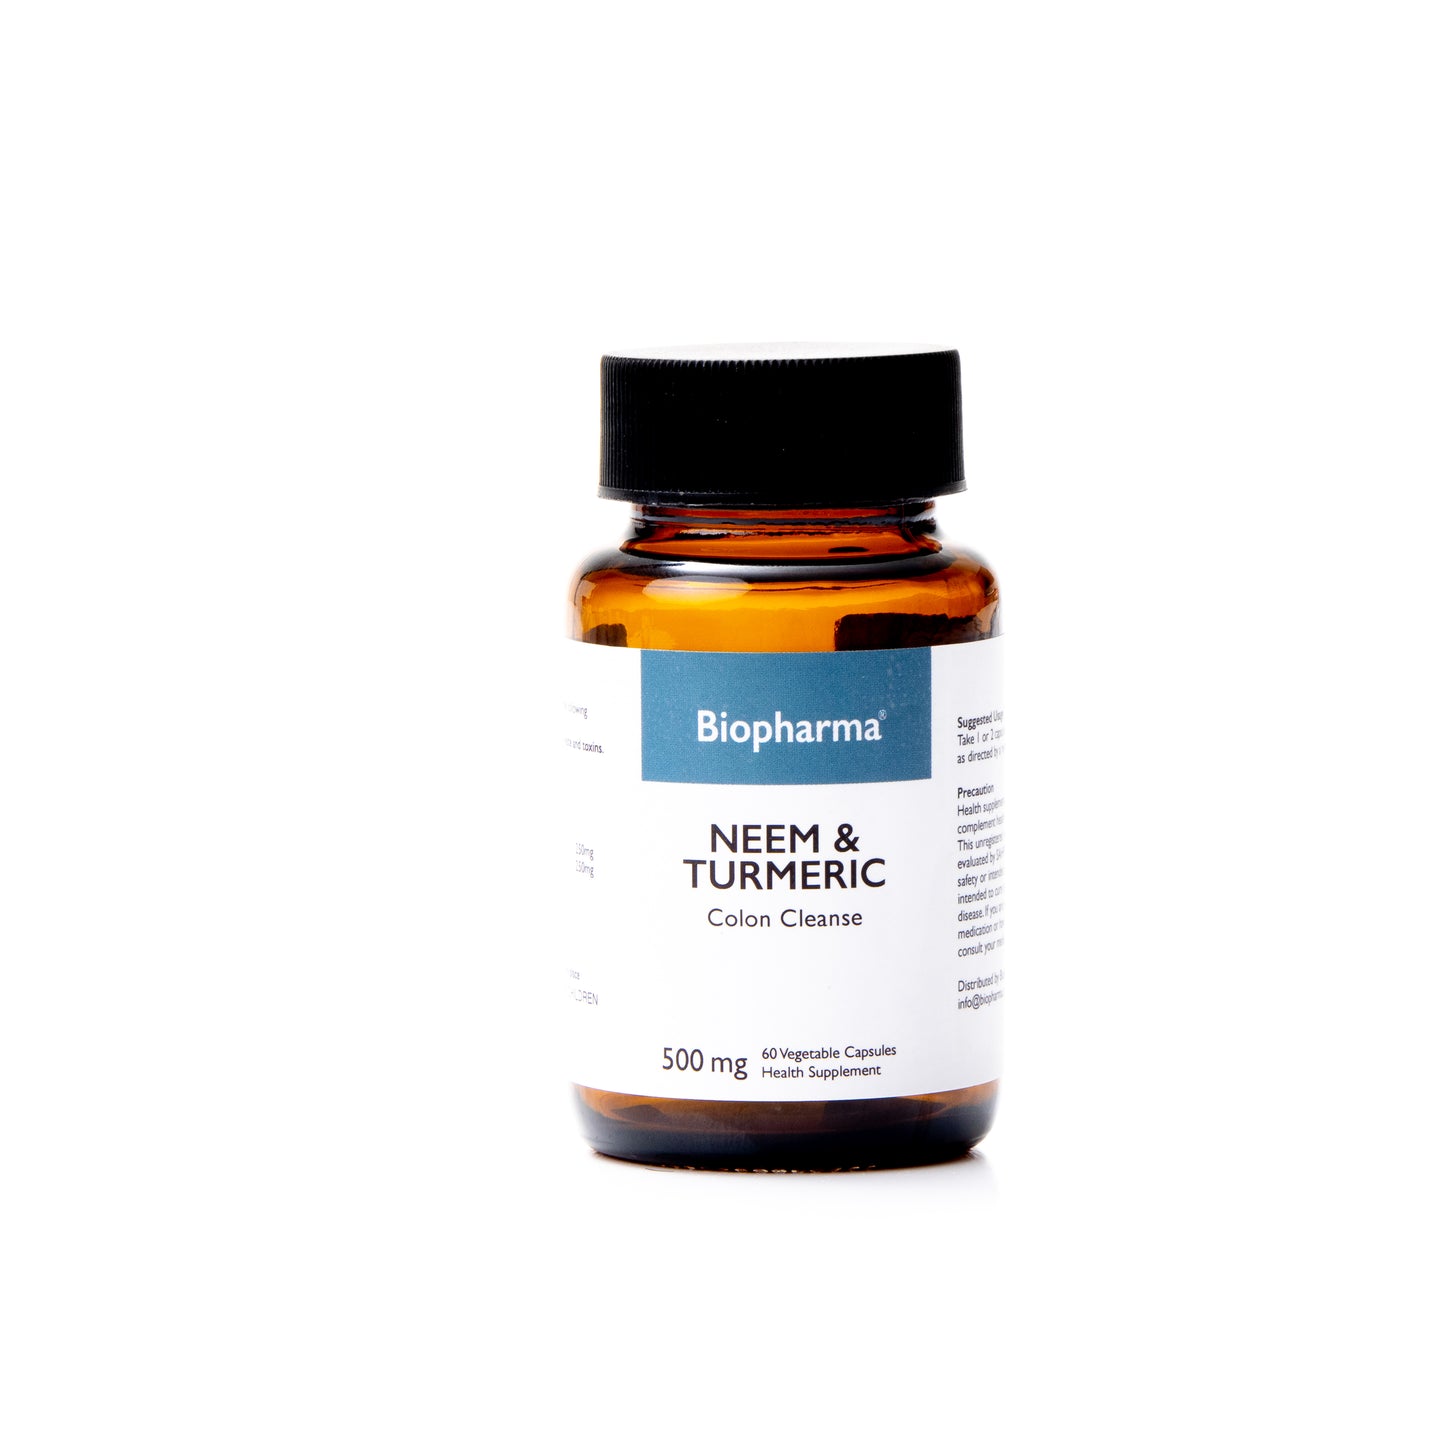 Biopharma Neem & Turmeric 500mg Supplements - 60 Veg Capsules